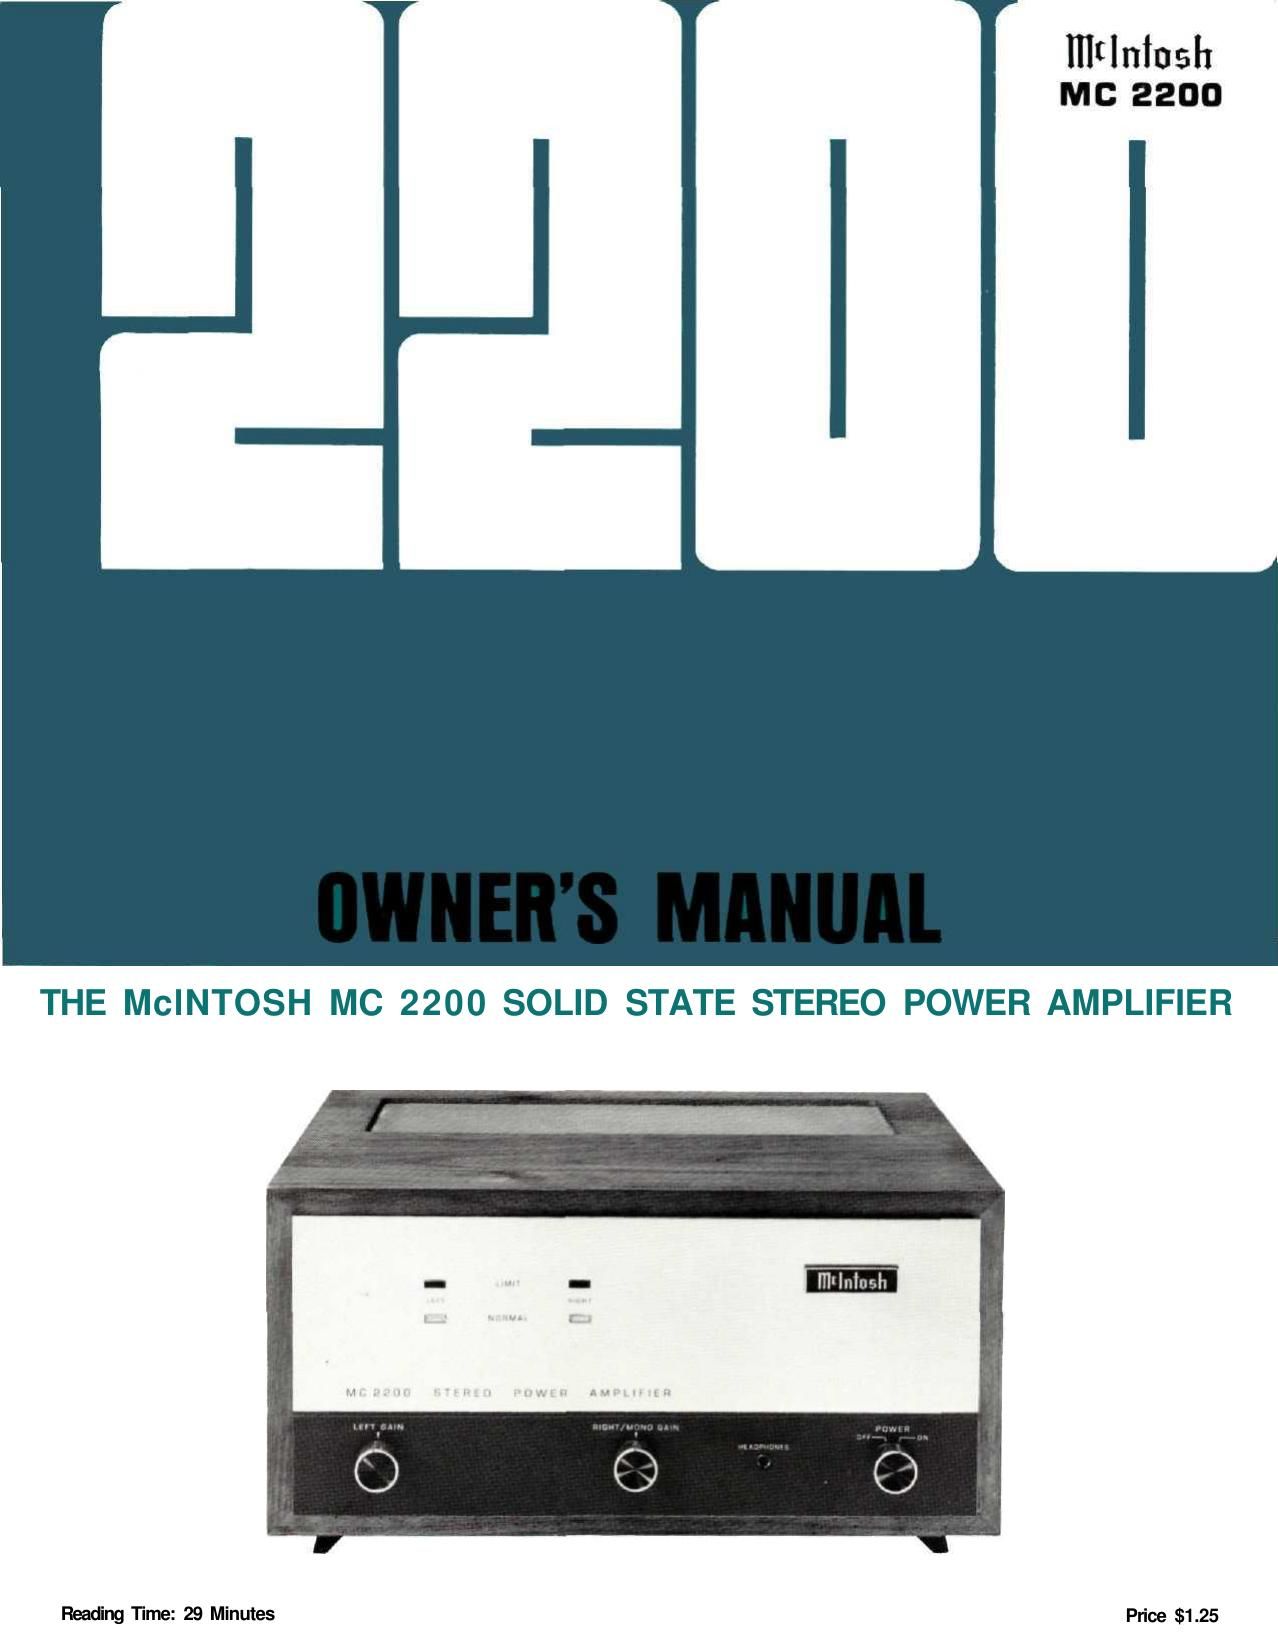 McIntosh MC 2200 Owners Manual